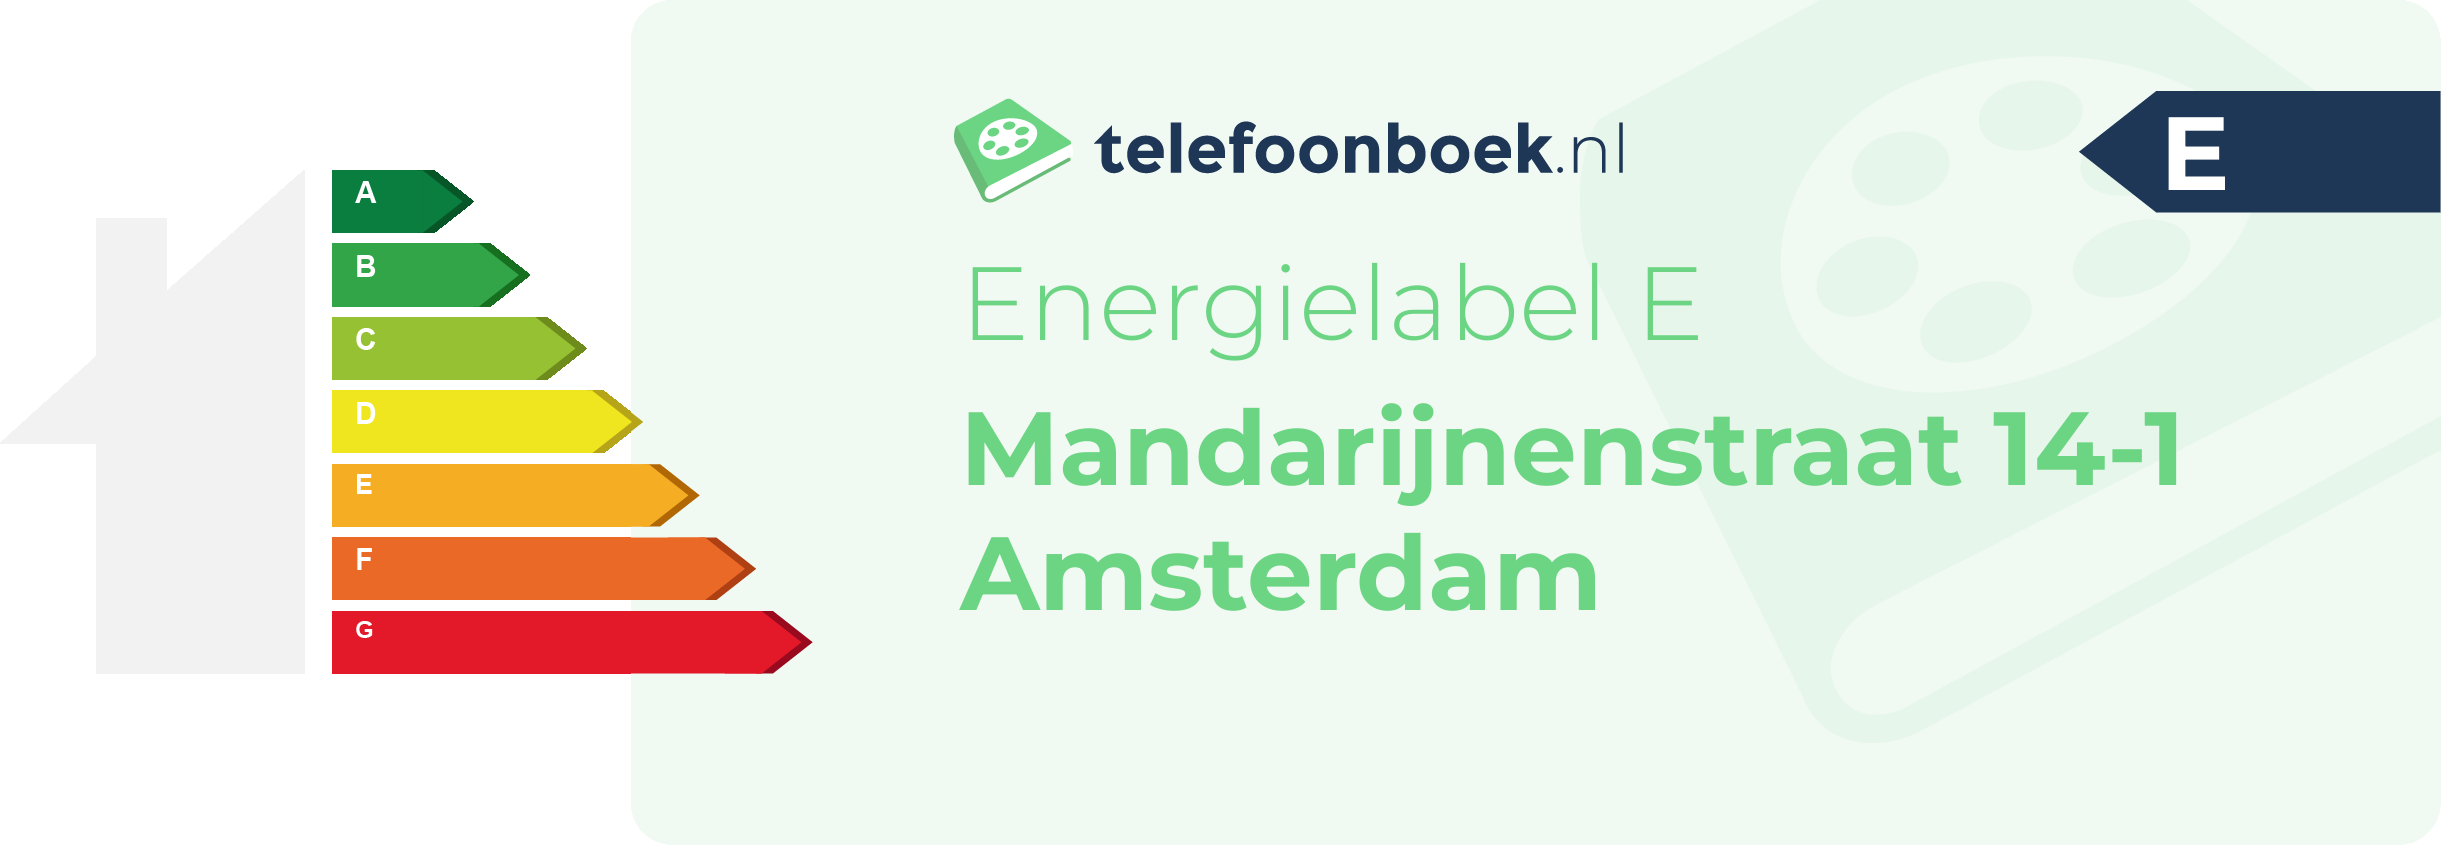 Energielabel Mandarijnenstraat 14-1 Amsterdam